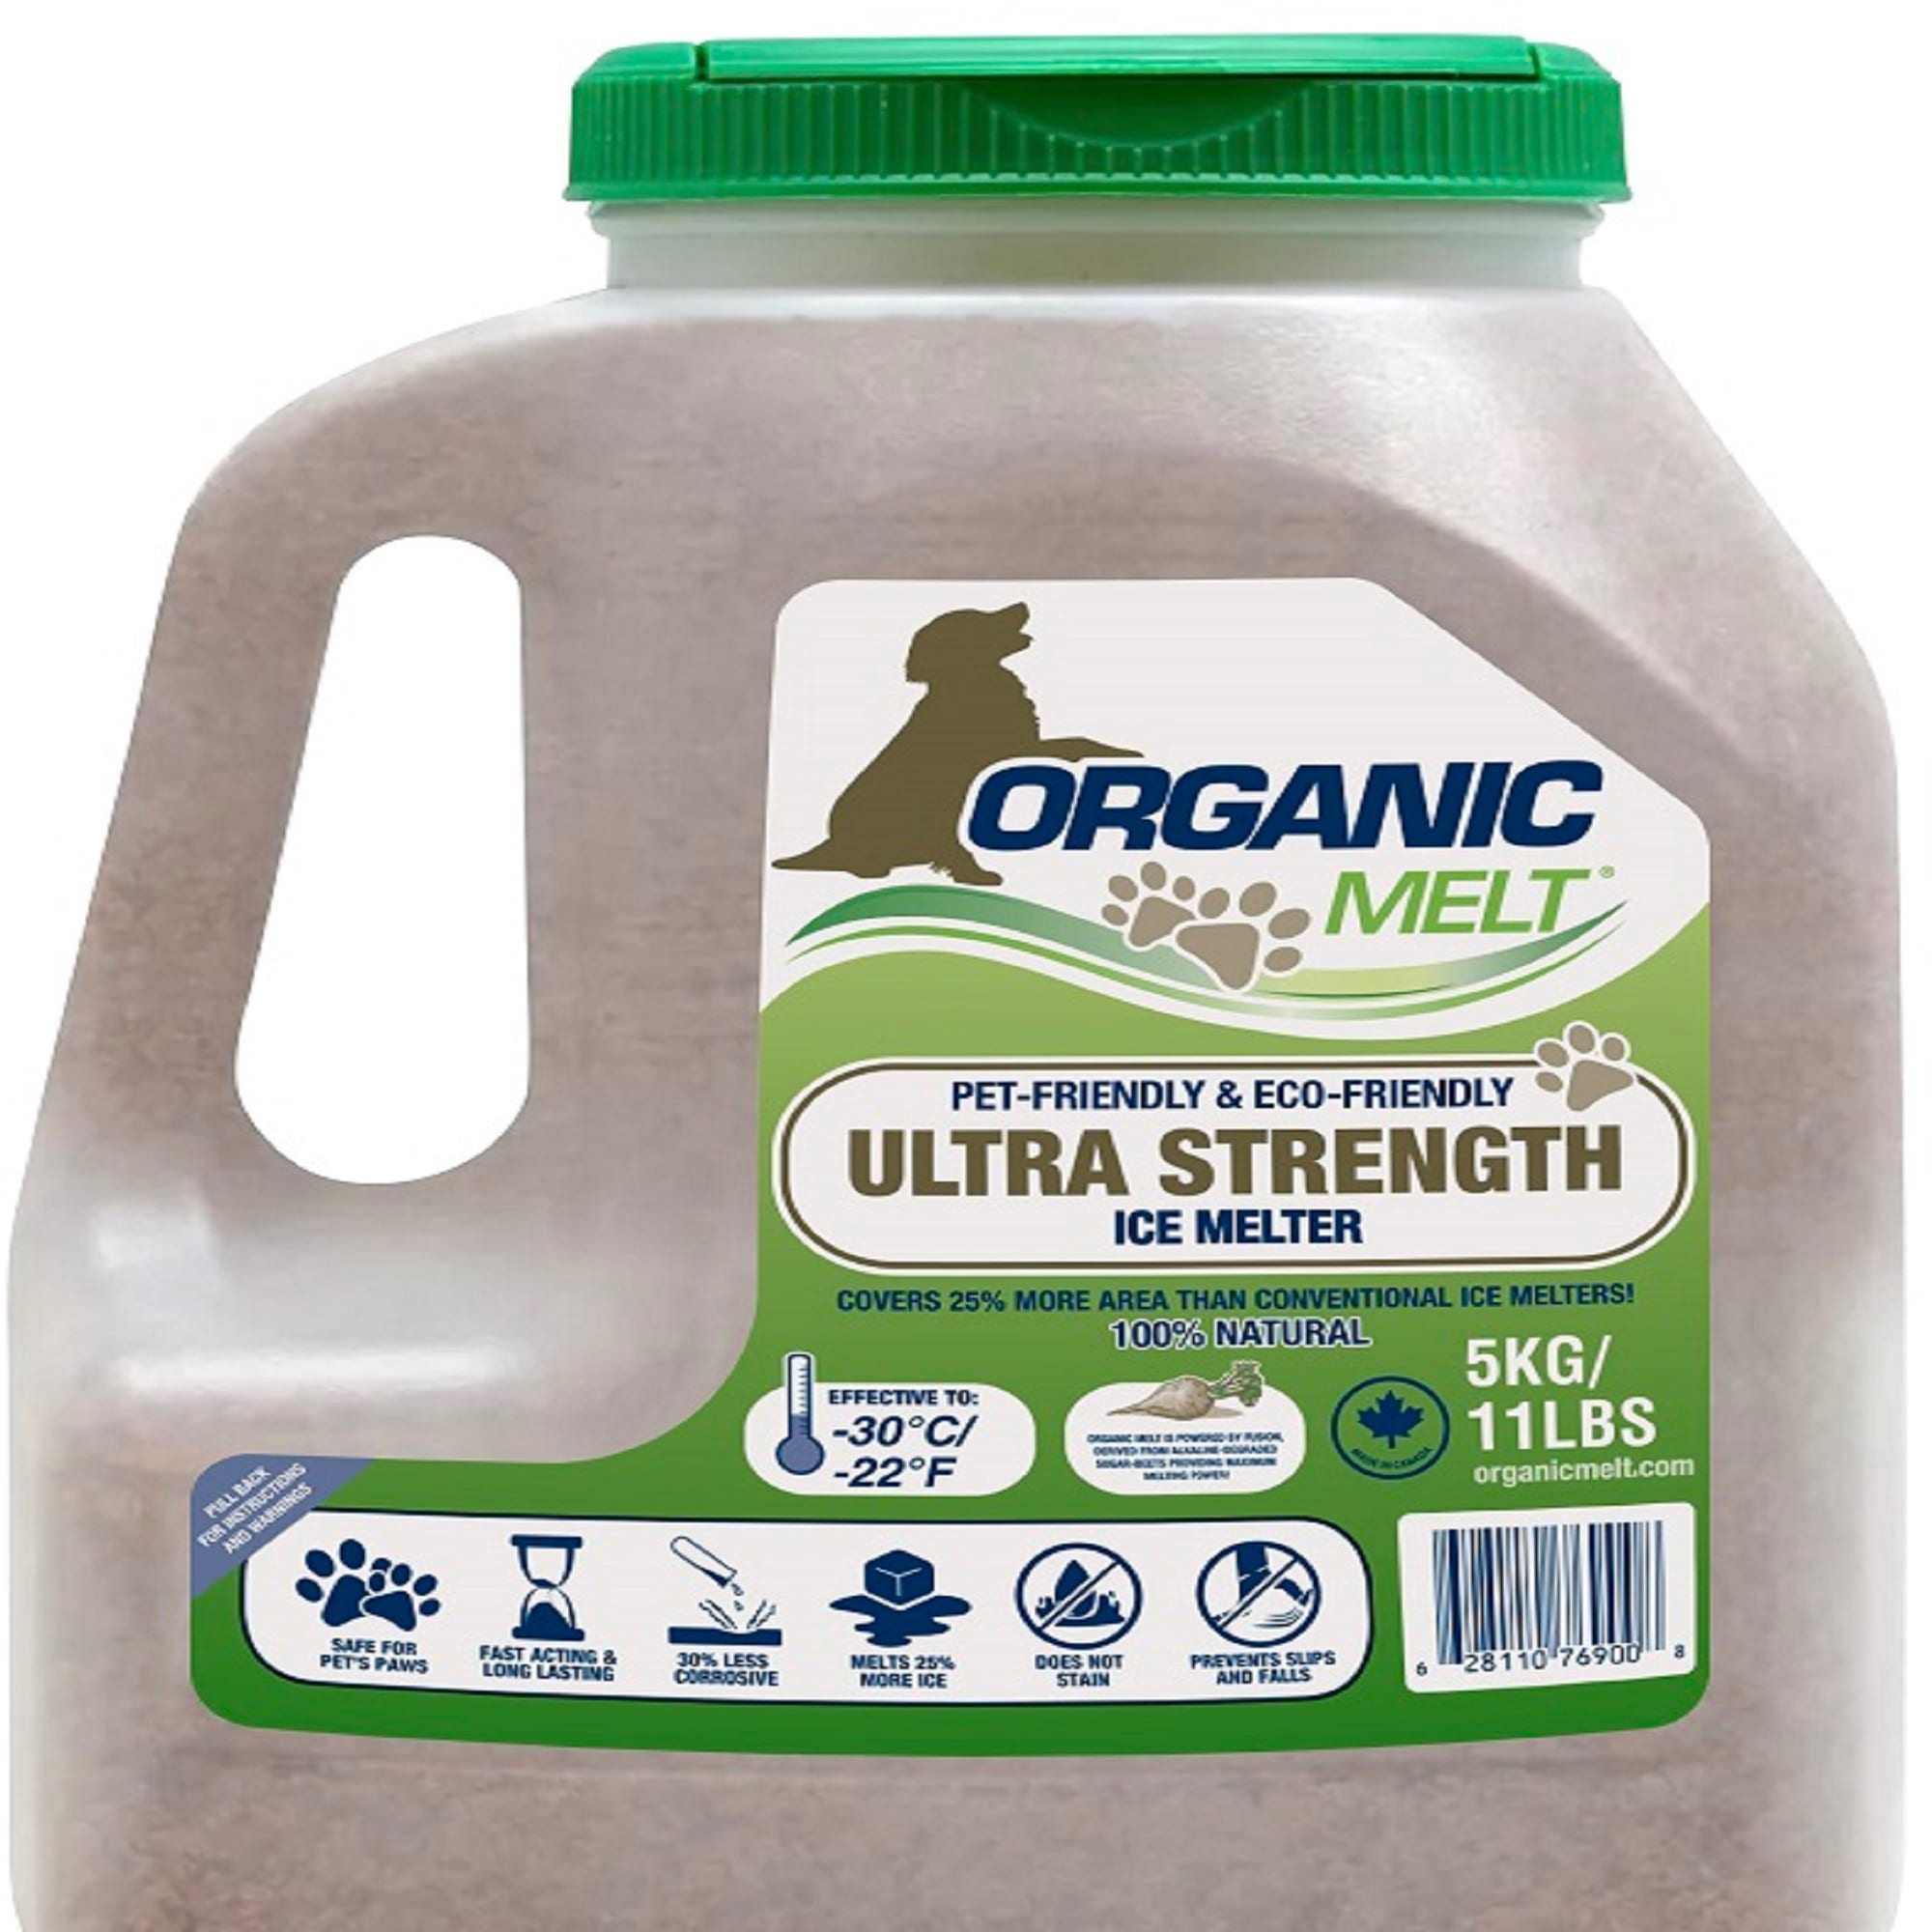 Organic Melt Premium Pet and Eco Friendly Ice Melt